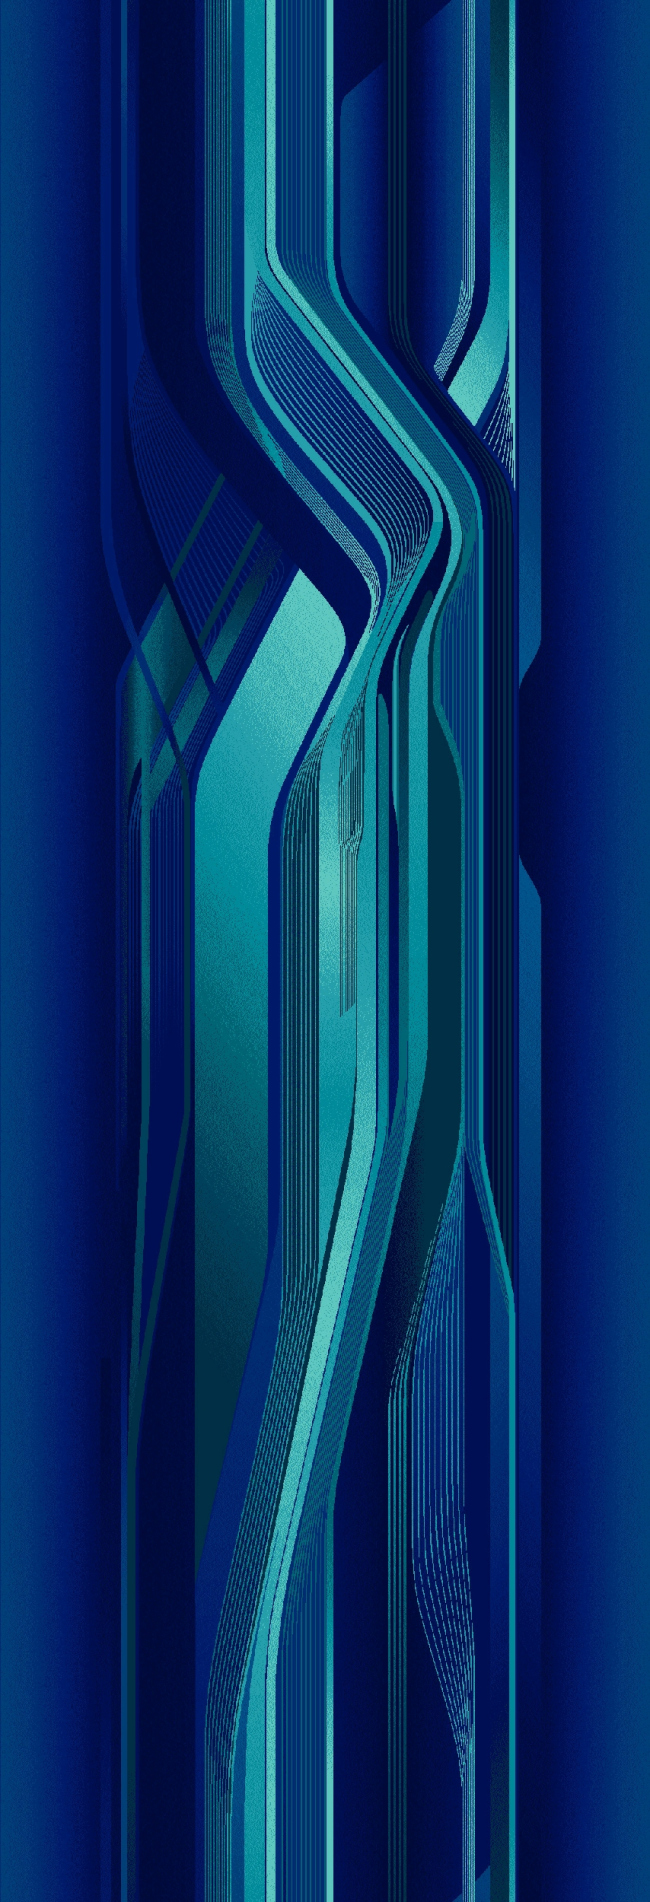  RE/Form (Striation).   Zaha Hadid Design